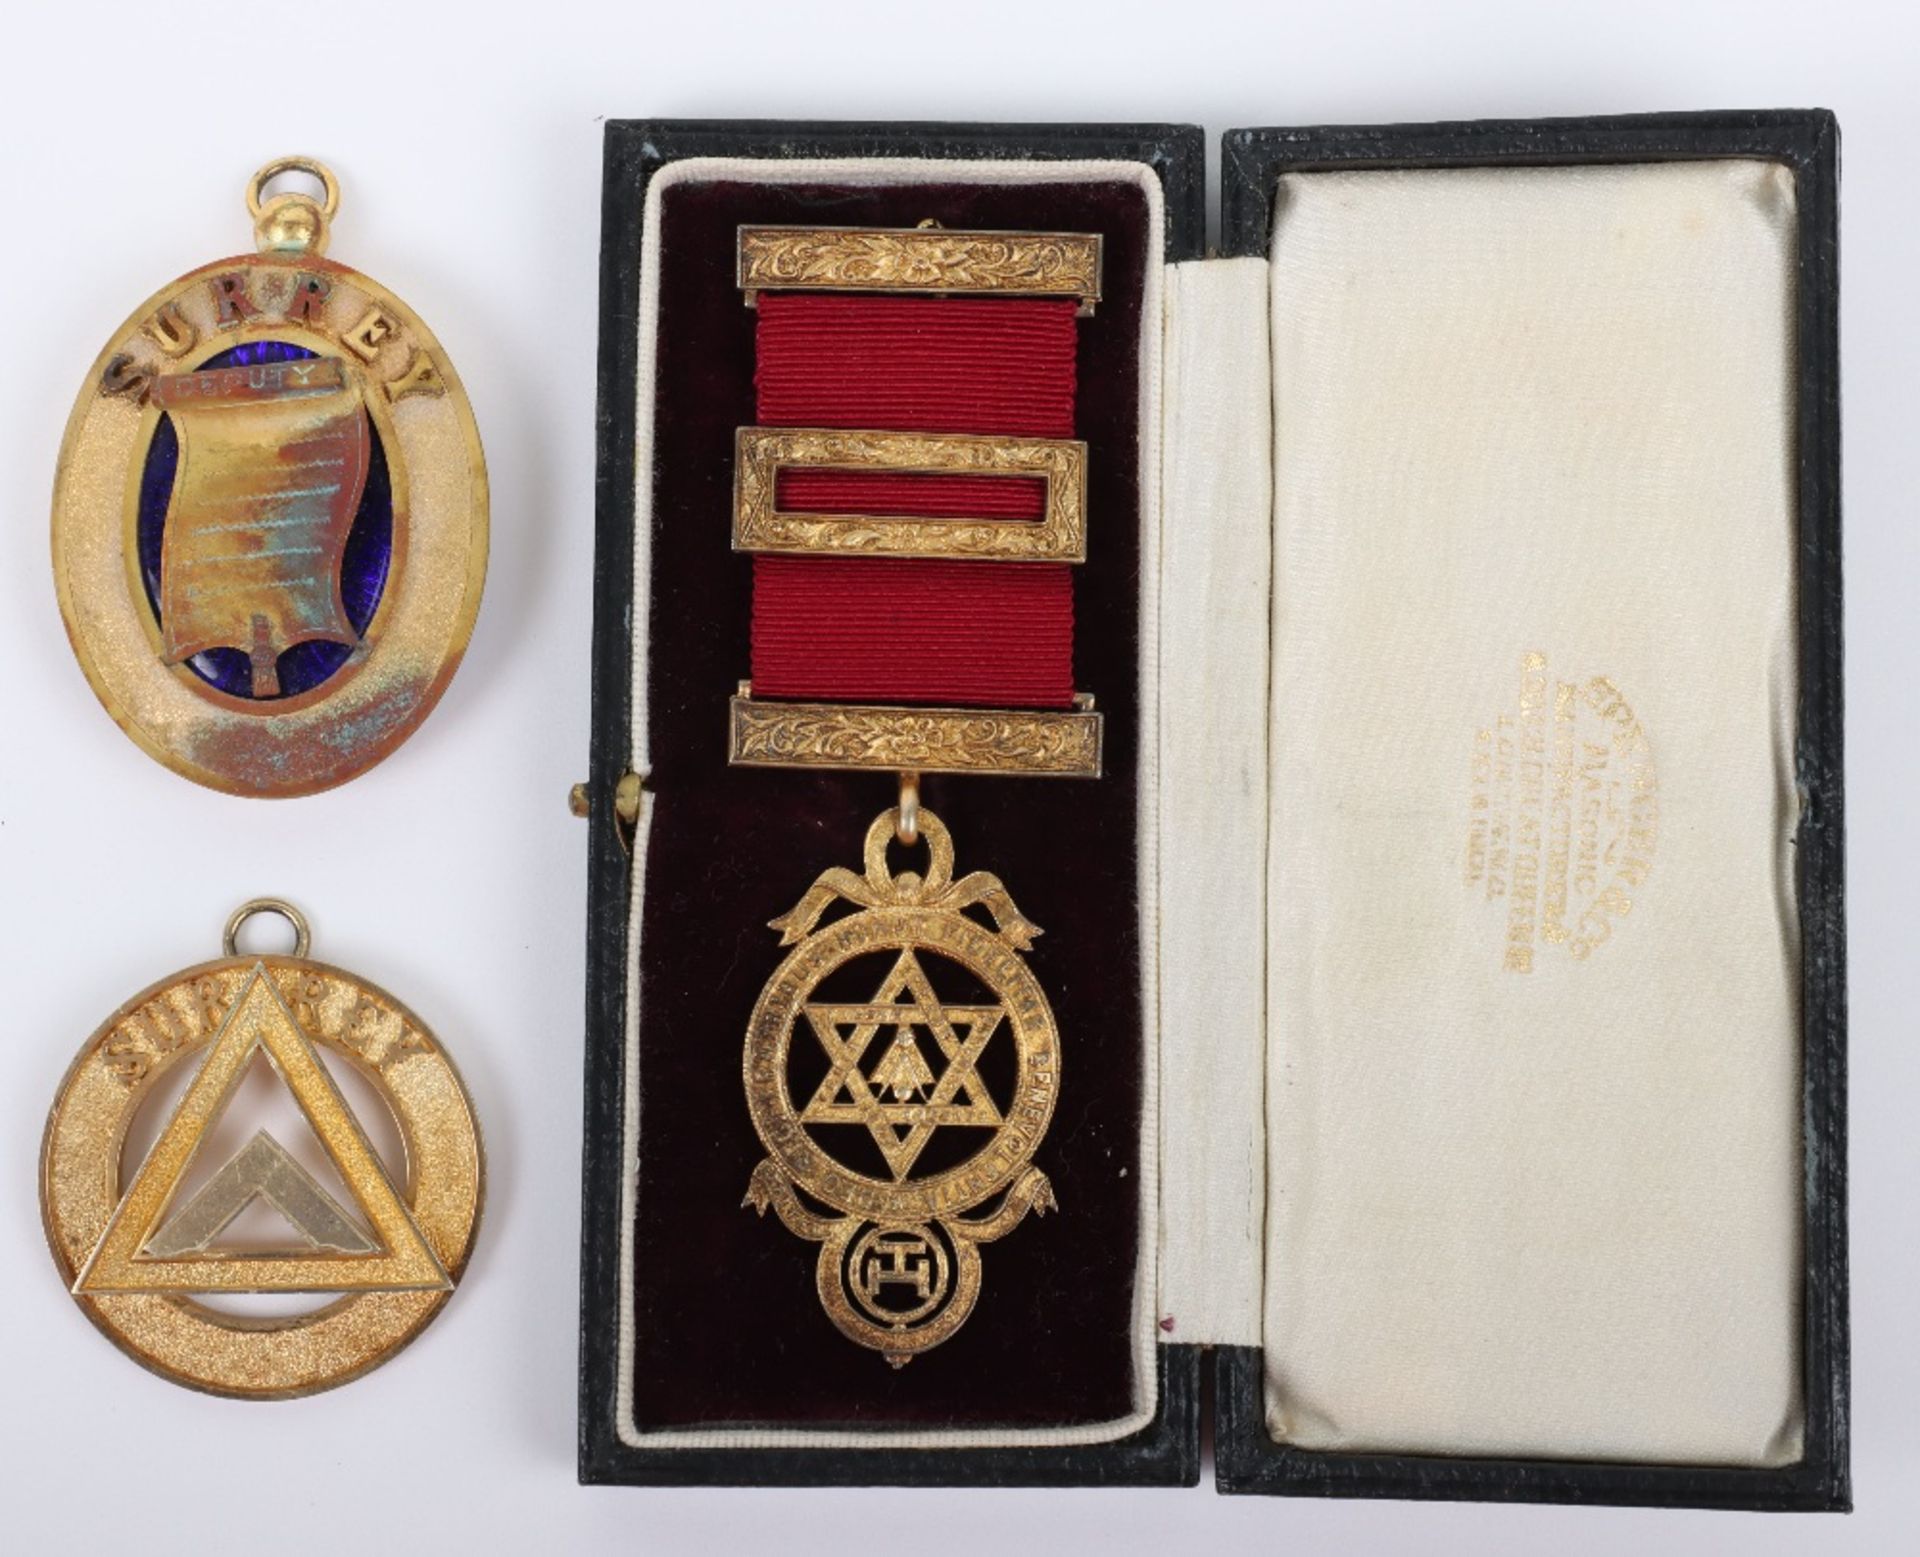 A silver masonic medal ‘deo reci fratribus honor fidelitas benevolentia